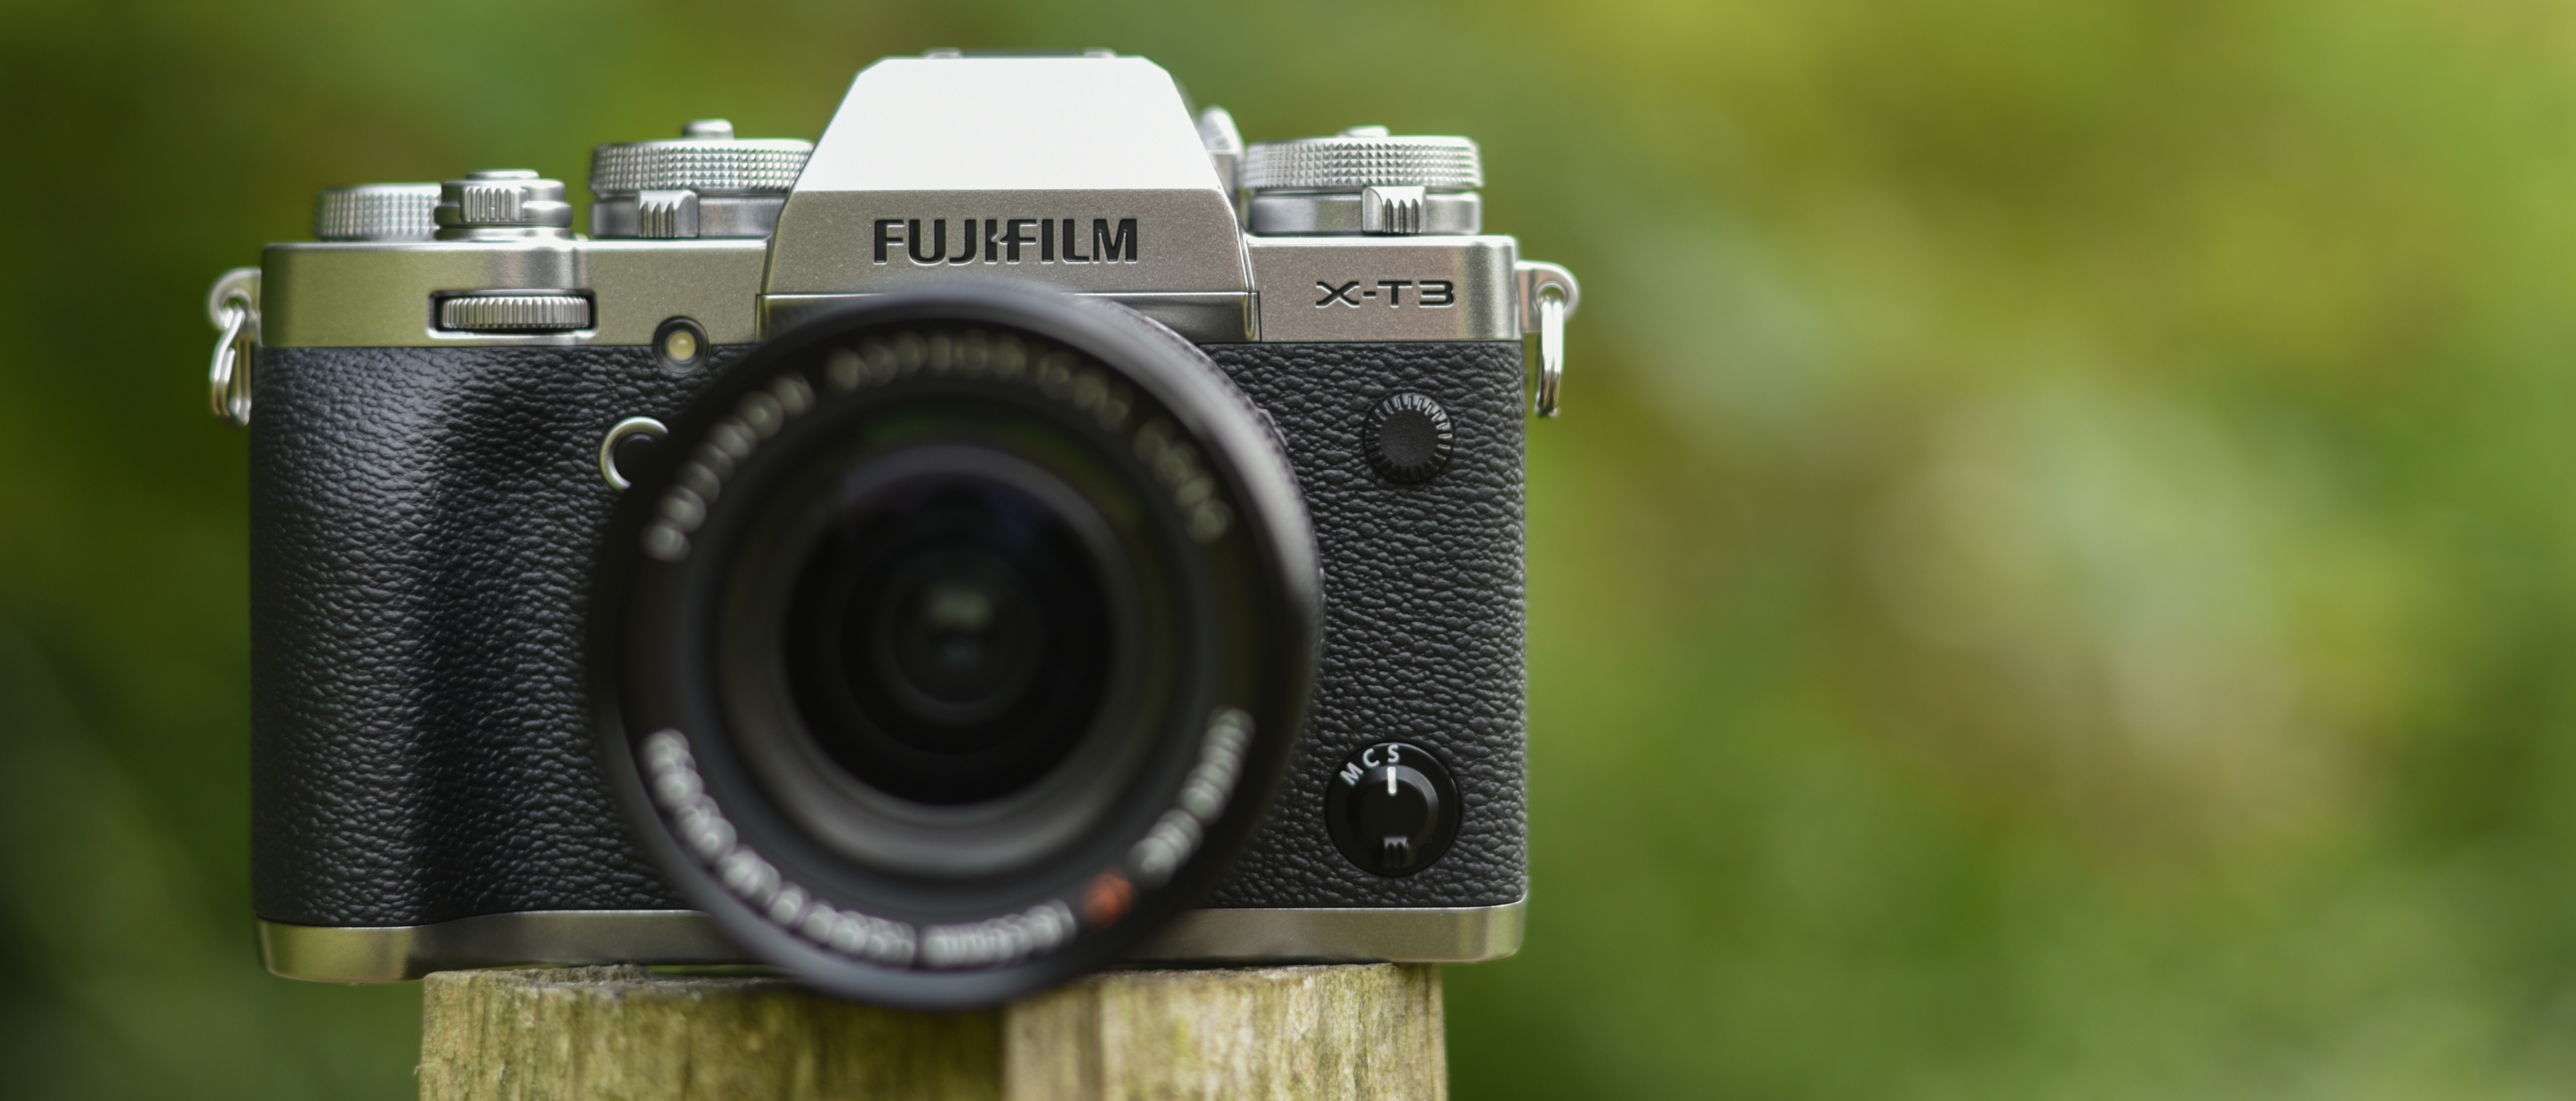 Vul in Reserve Elastisch Fujifilm X-T3 review | TechRadar